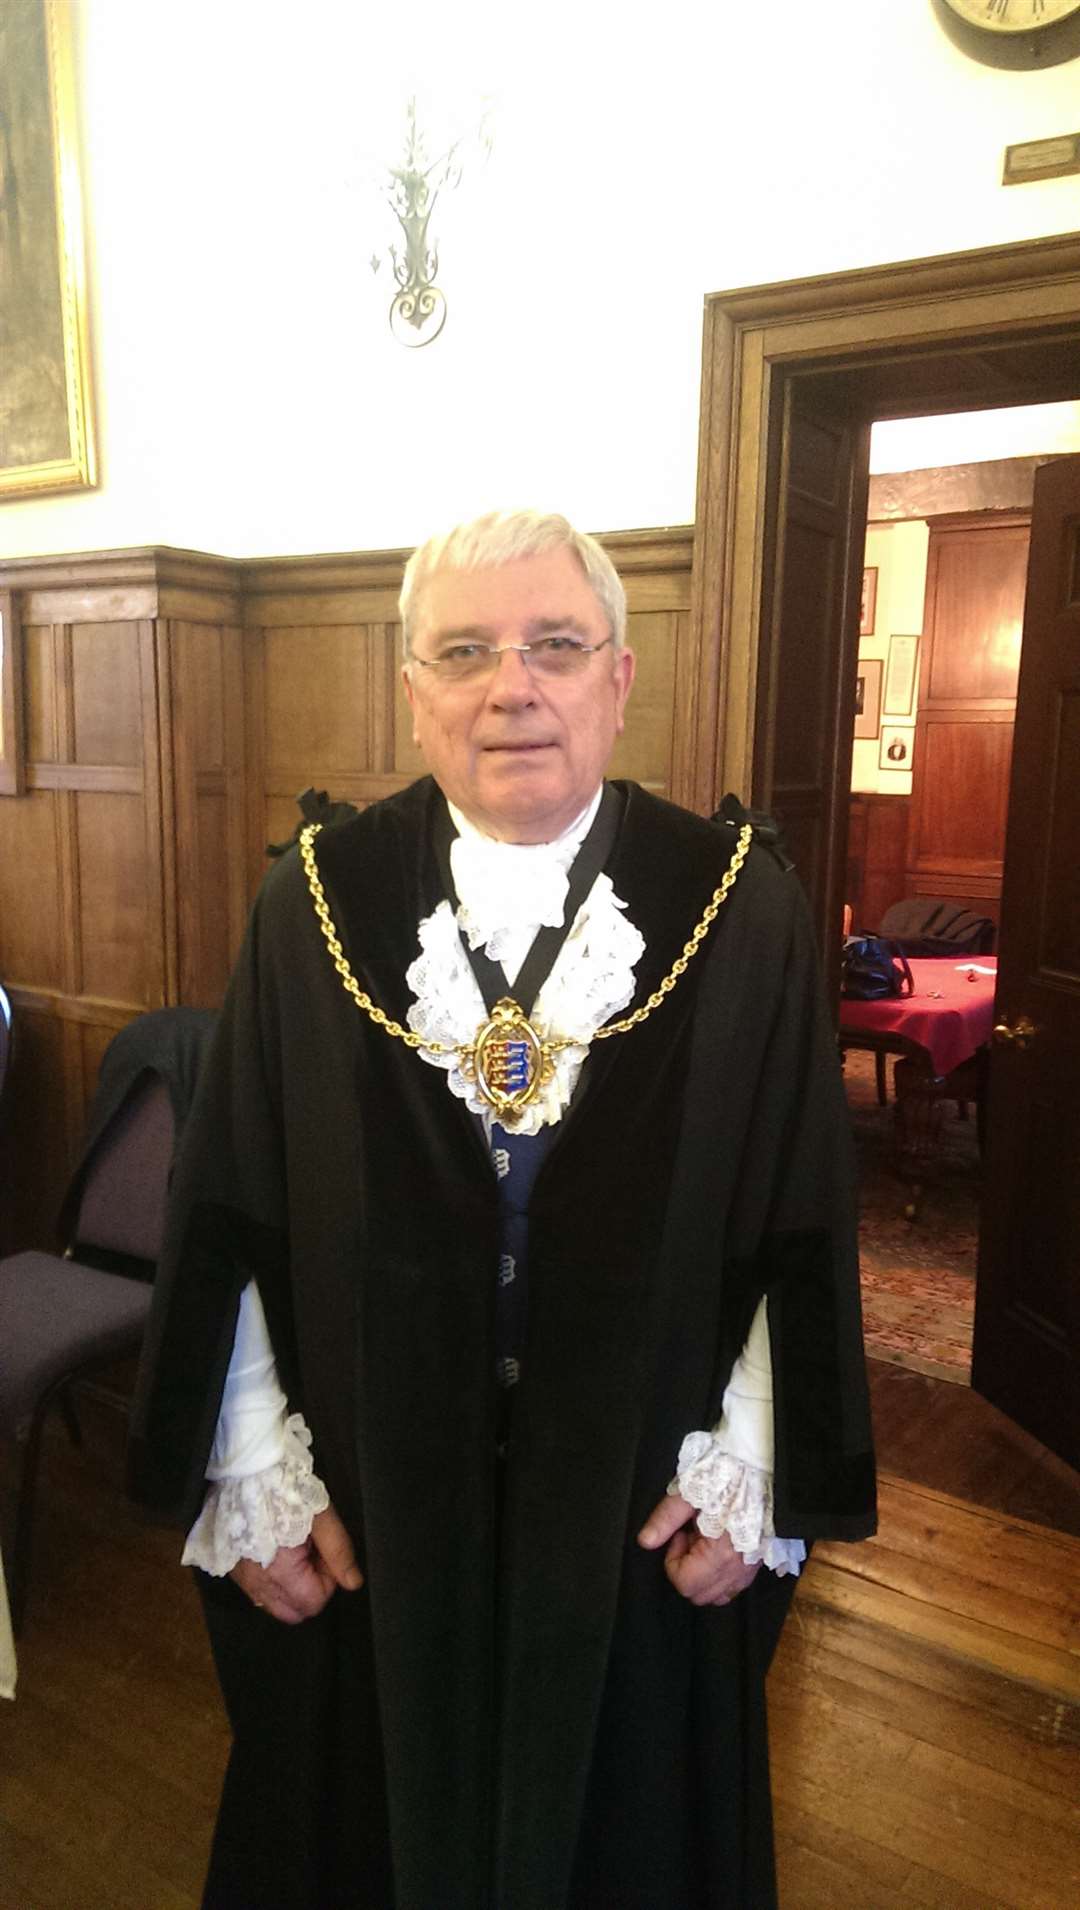 The mayor of Sandwich, Cllr Paul Graeme